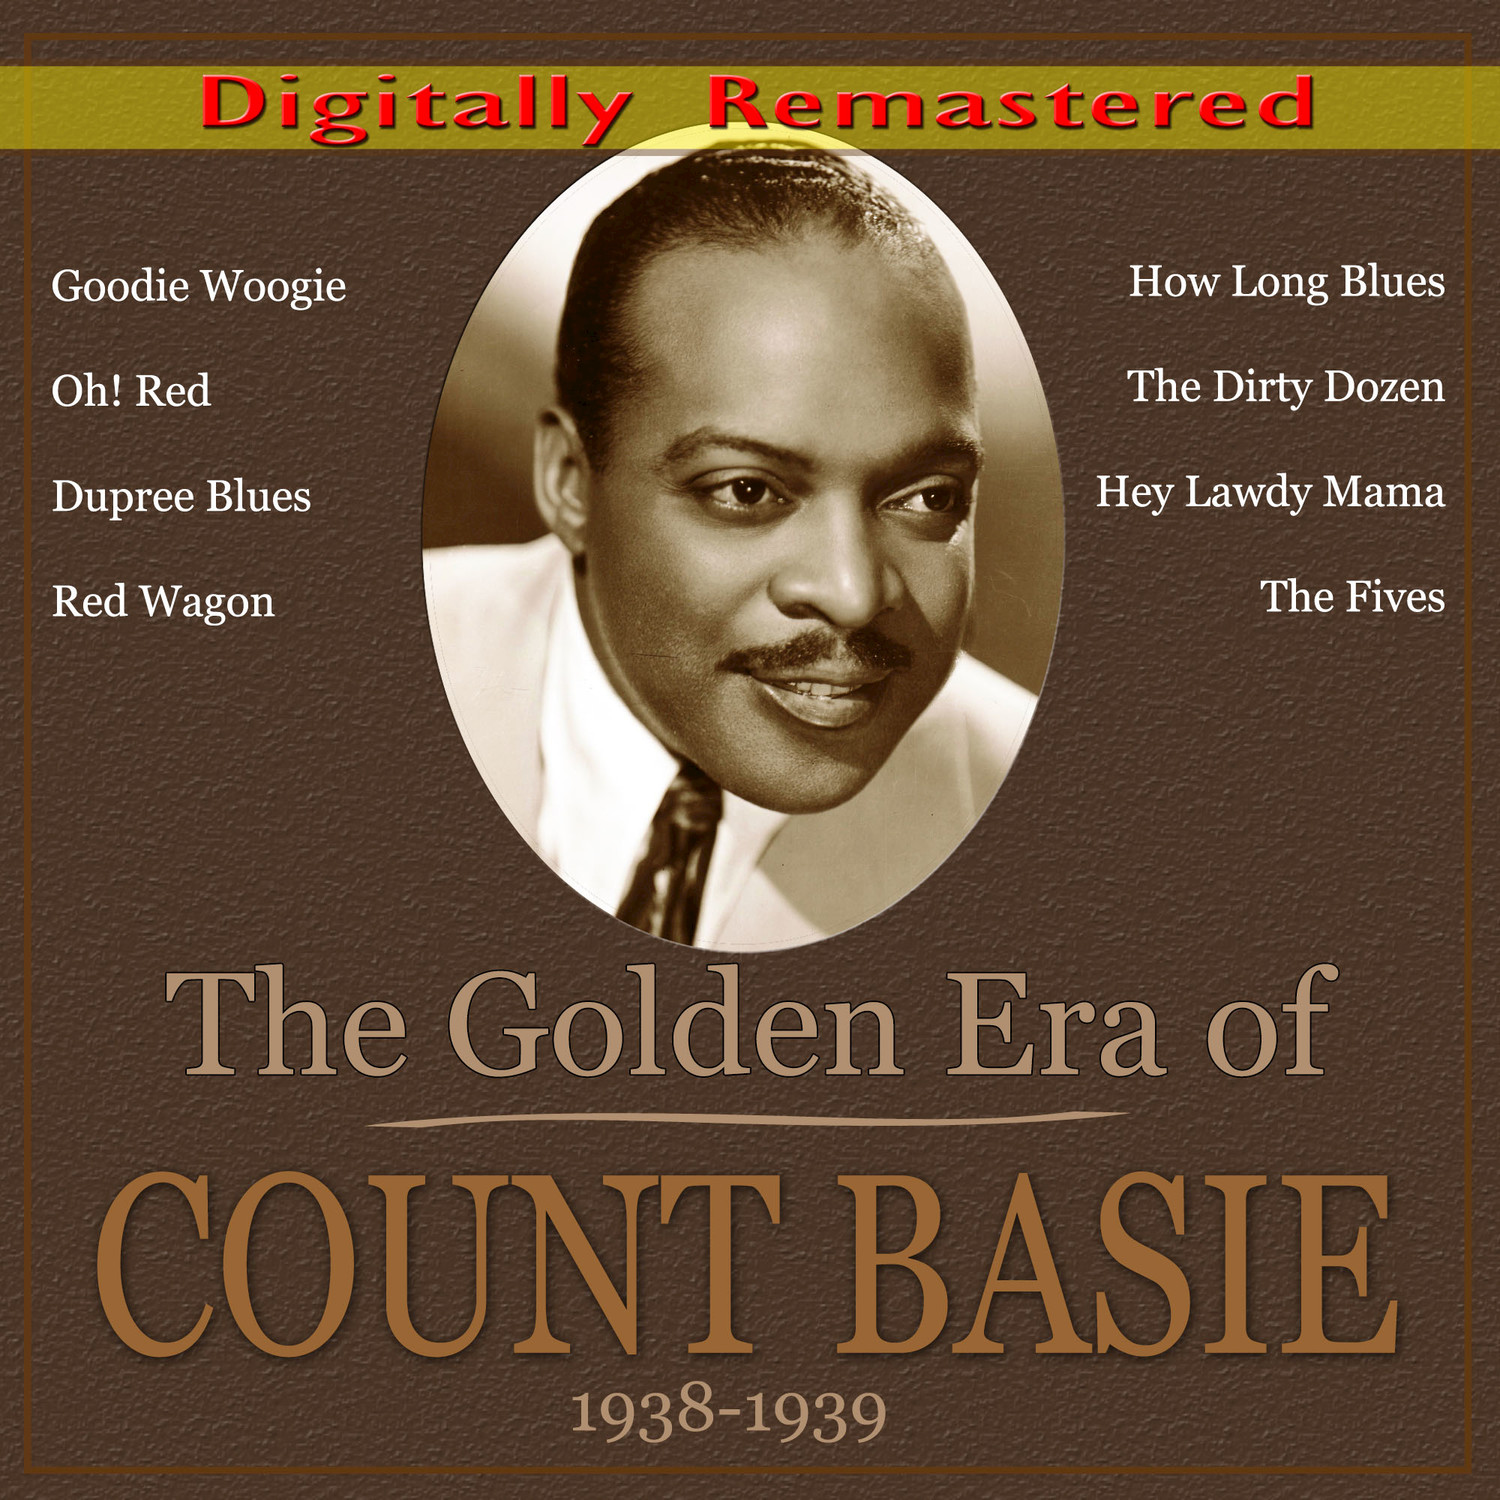 The Golden Era of Count Basie: 1938-1939